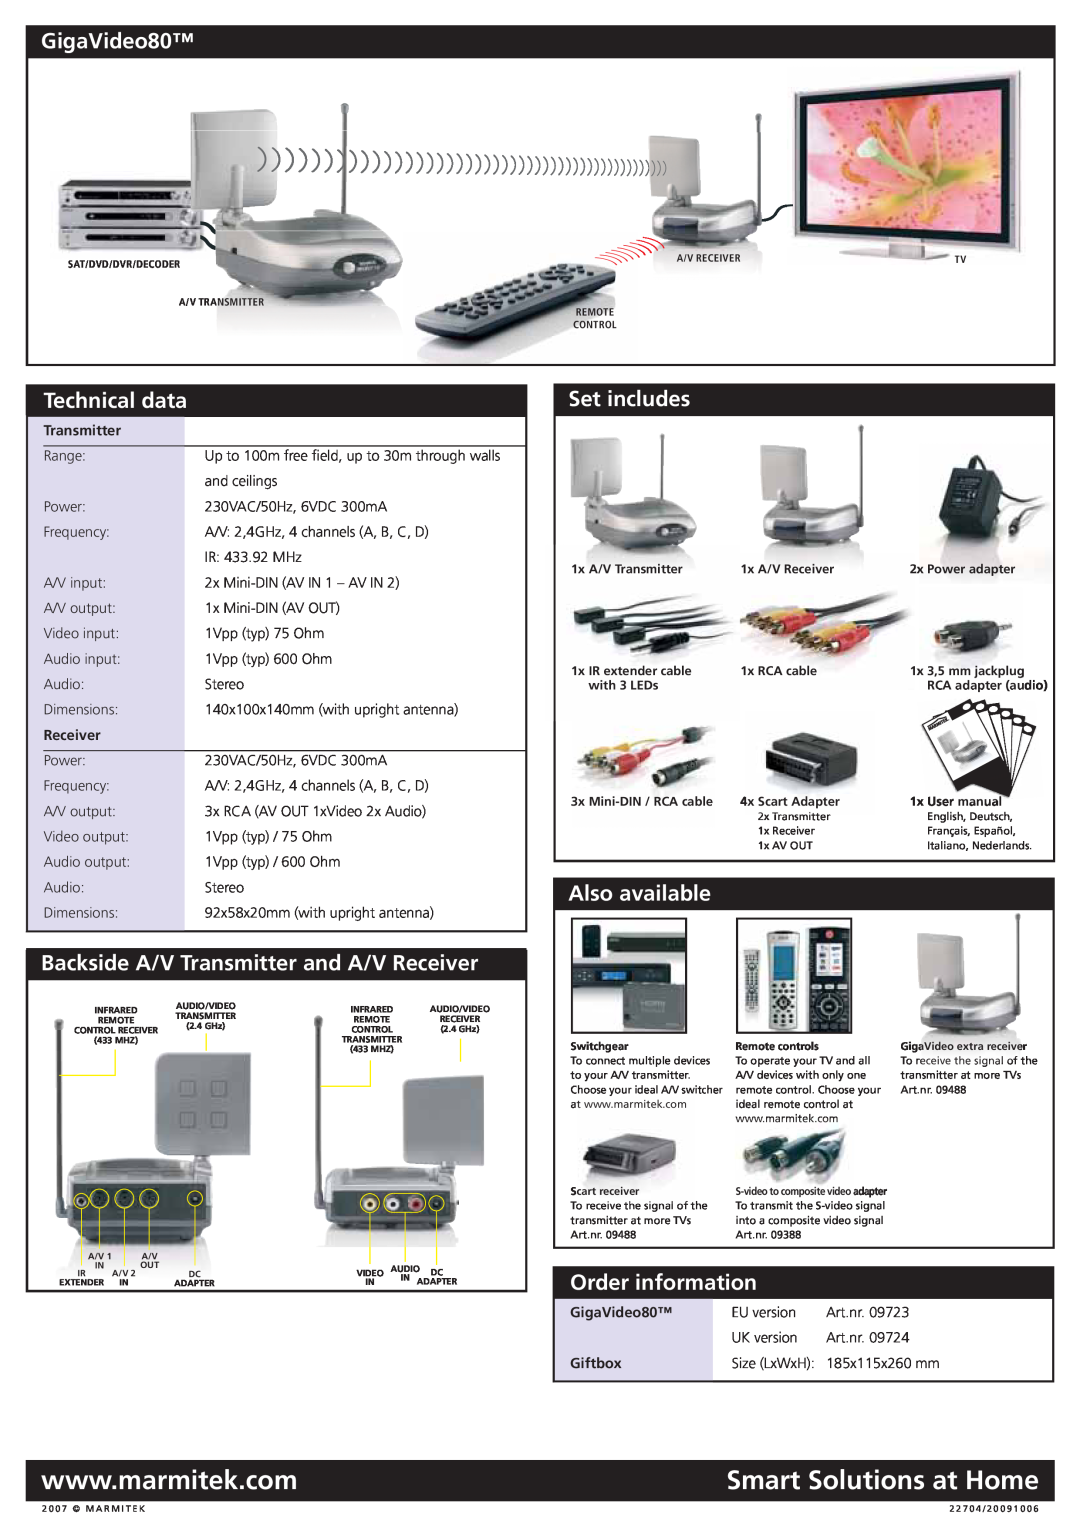 Marmitek Stereo Receiver Smart Solutions at Home, GigaVideo80, Technical data, Backside A/V Transmitter and A/V Receiver 